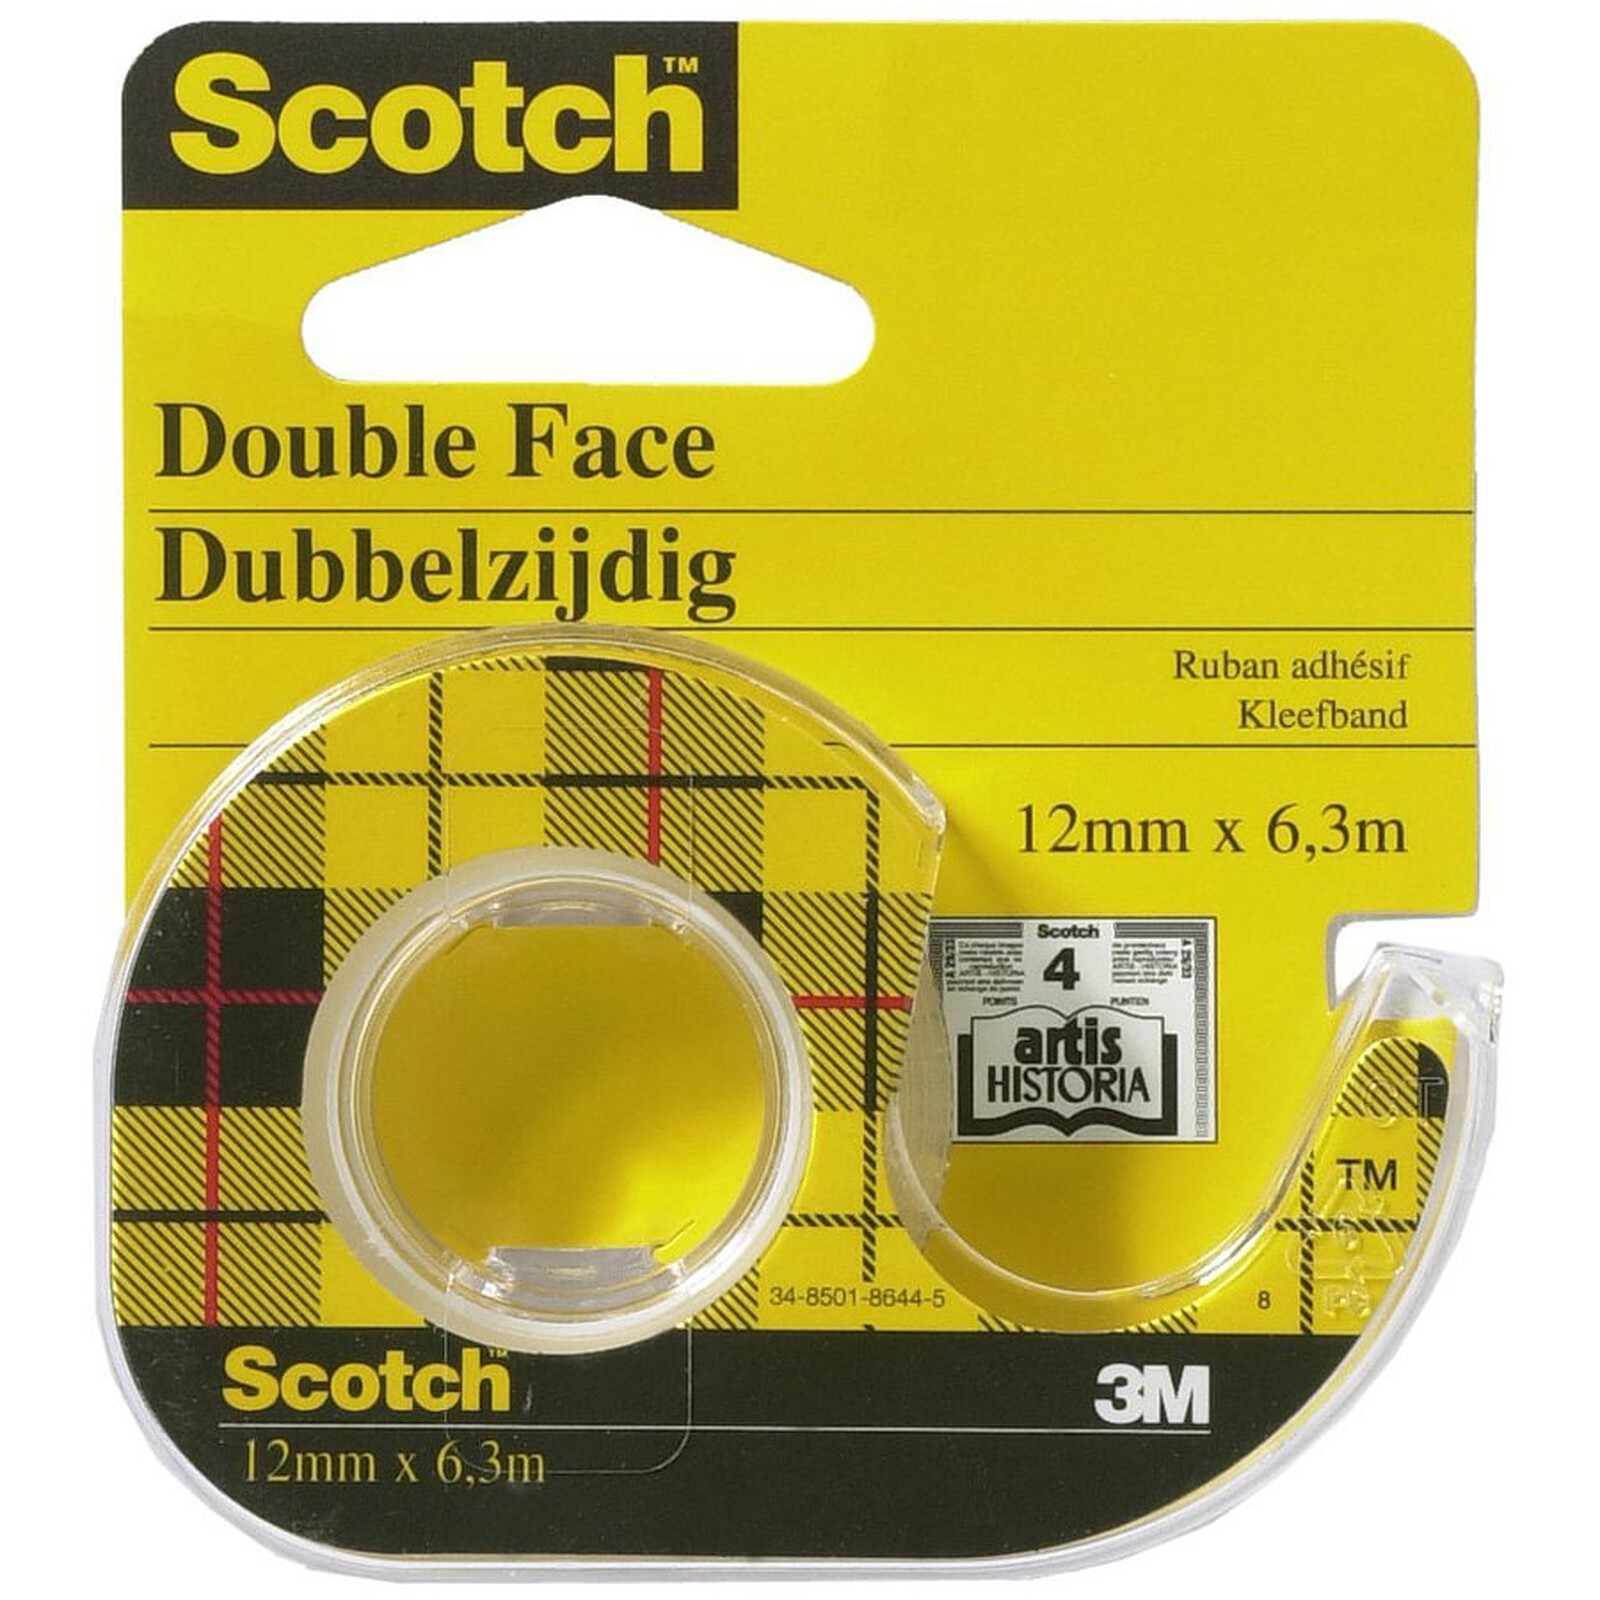 Ruban adhésif double face Scotch rouleau de 6,3 m